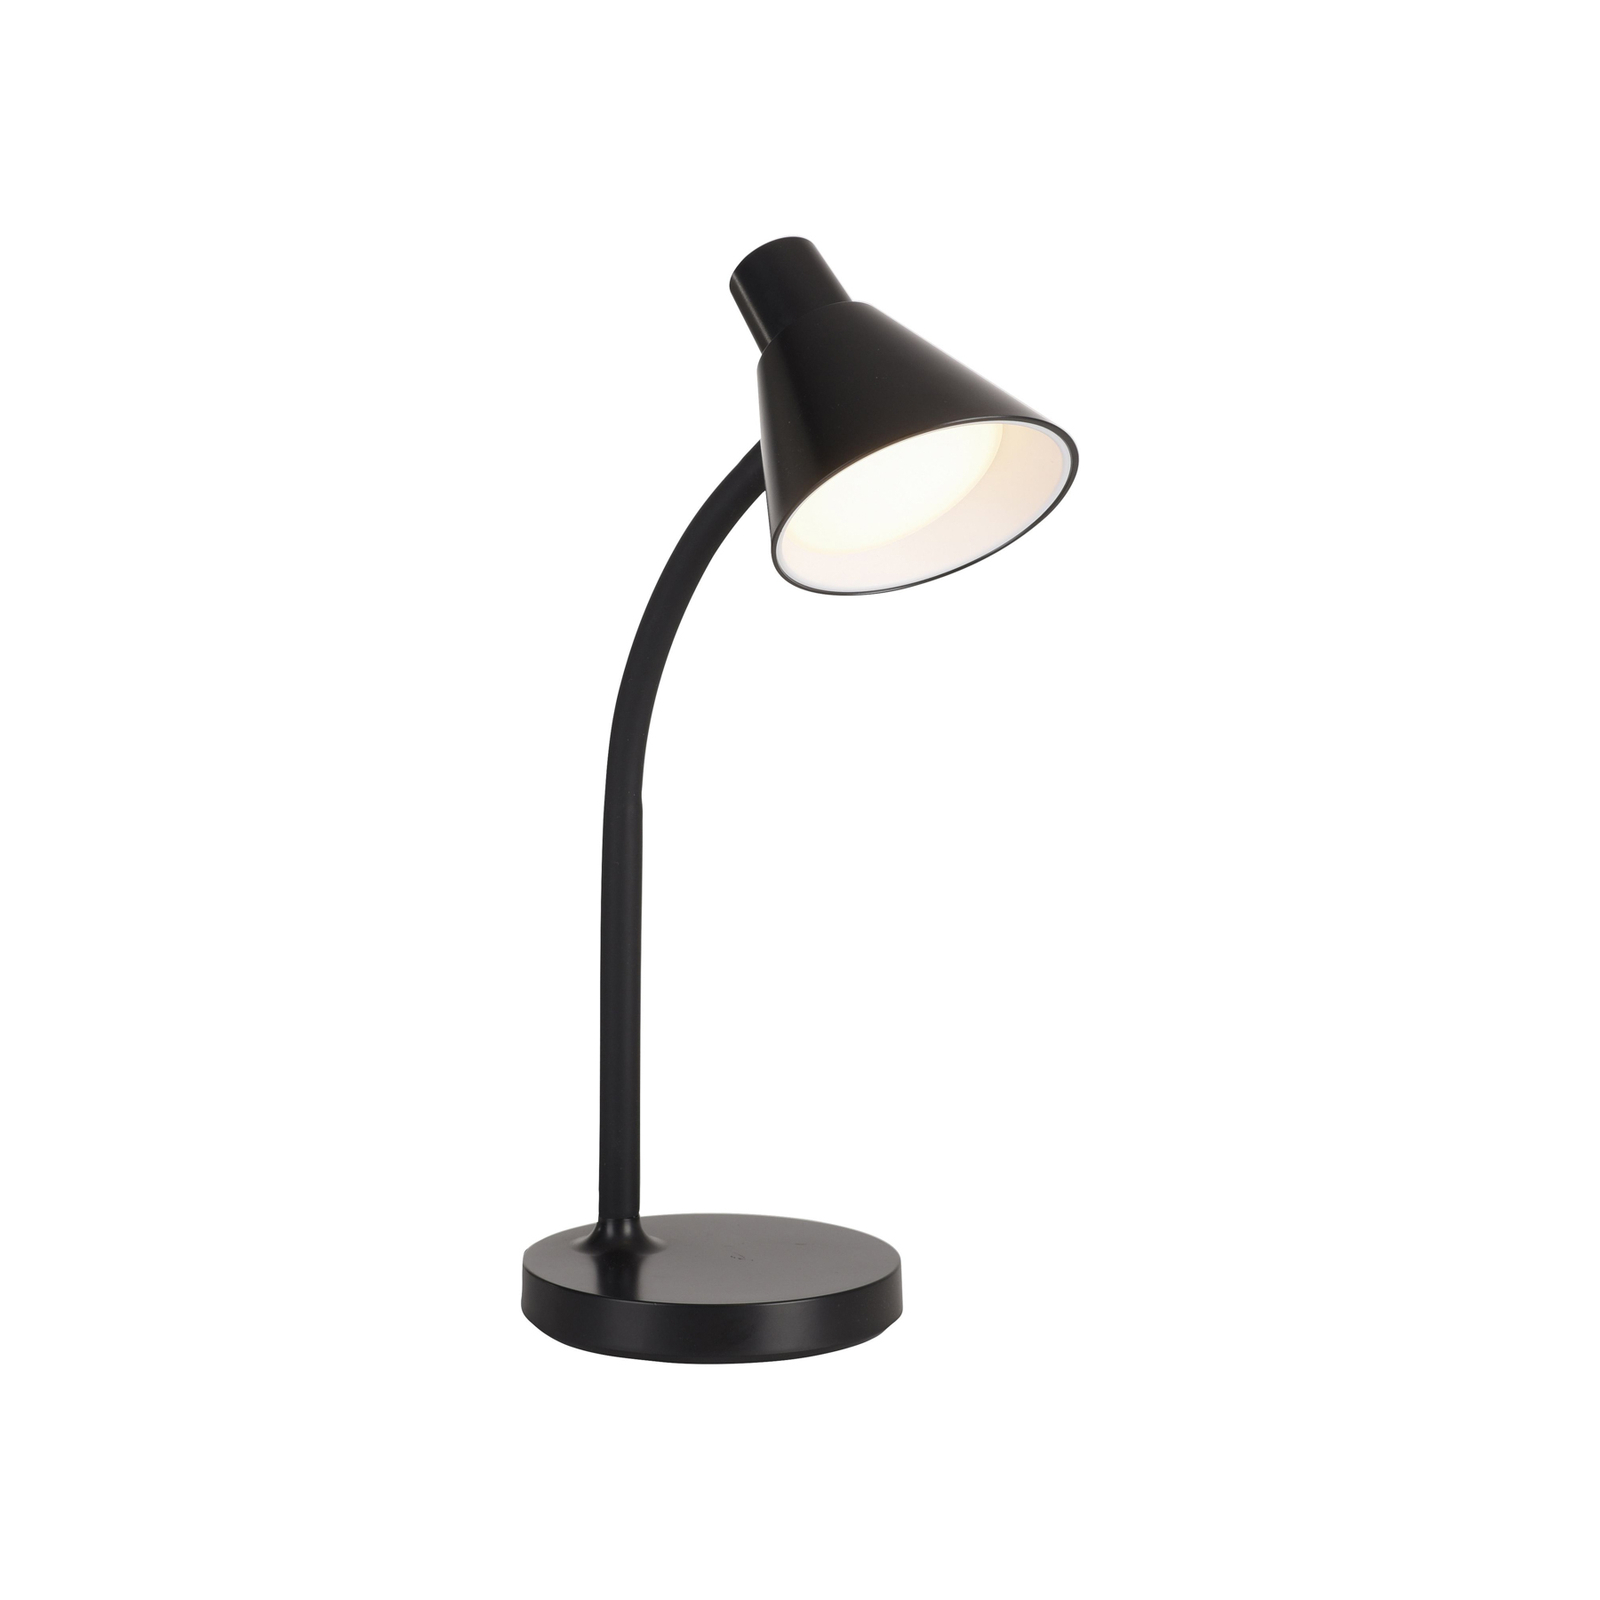 BARA LJUS. LED-bordslampa Pixie, plast, svart